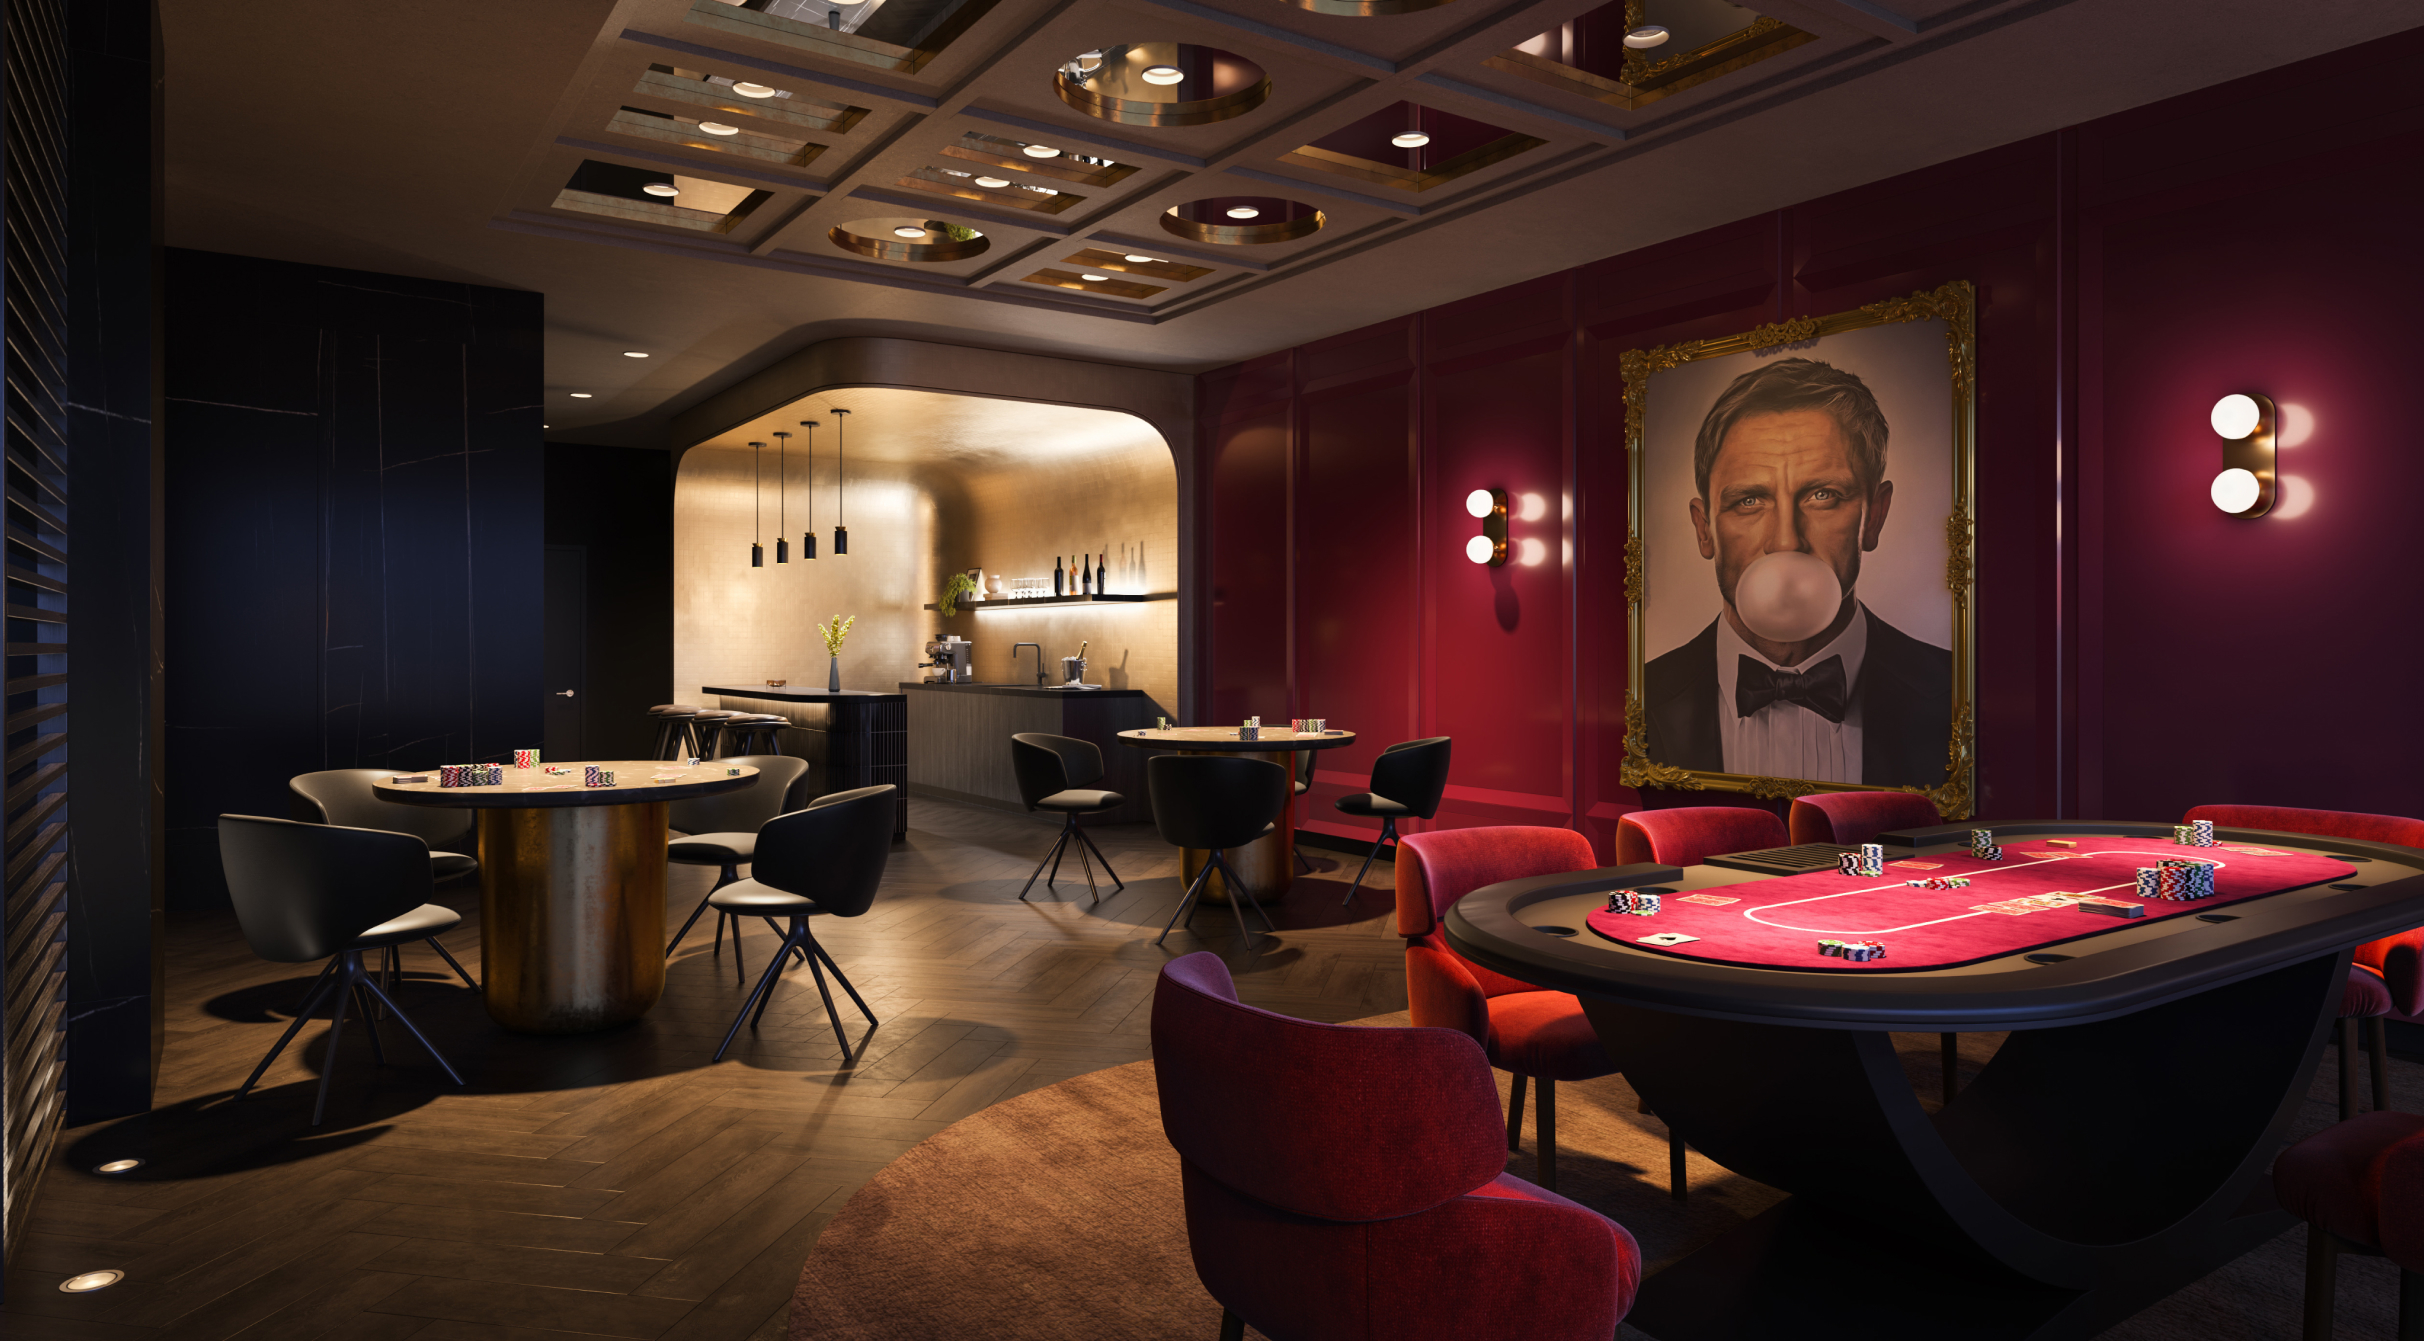 James Bond Inspired Games Room